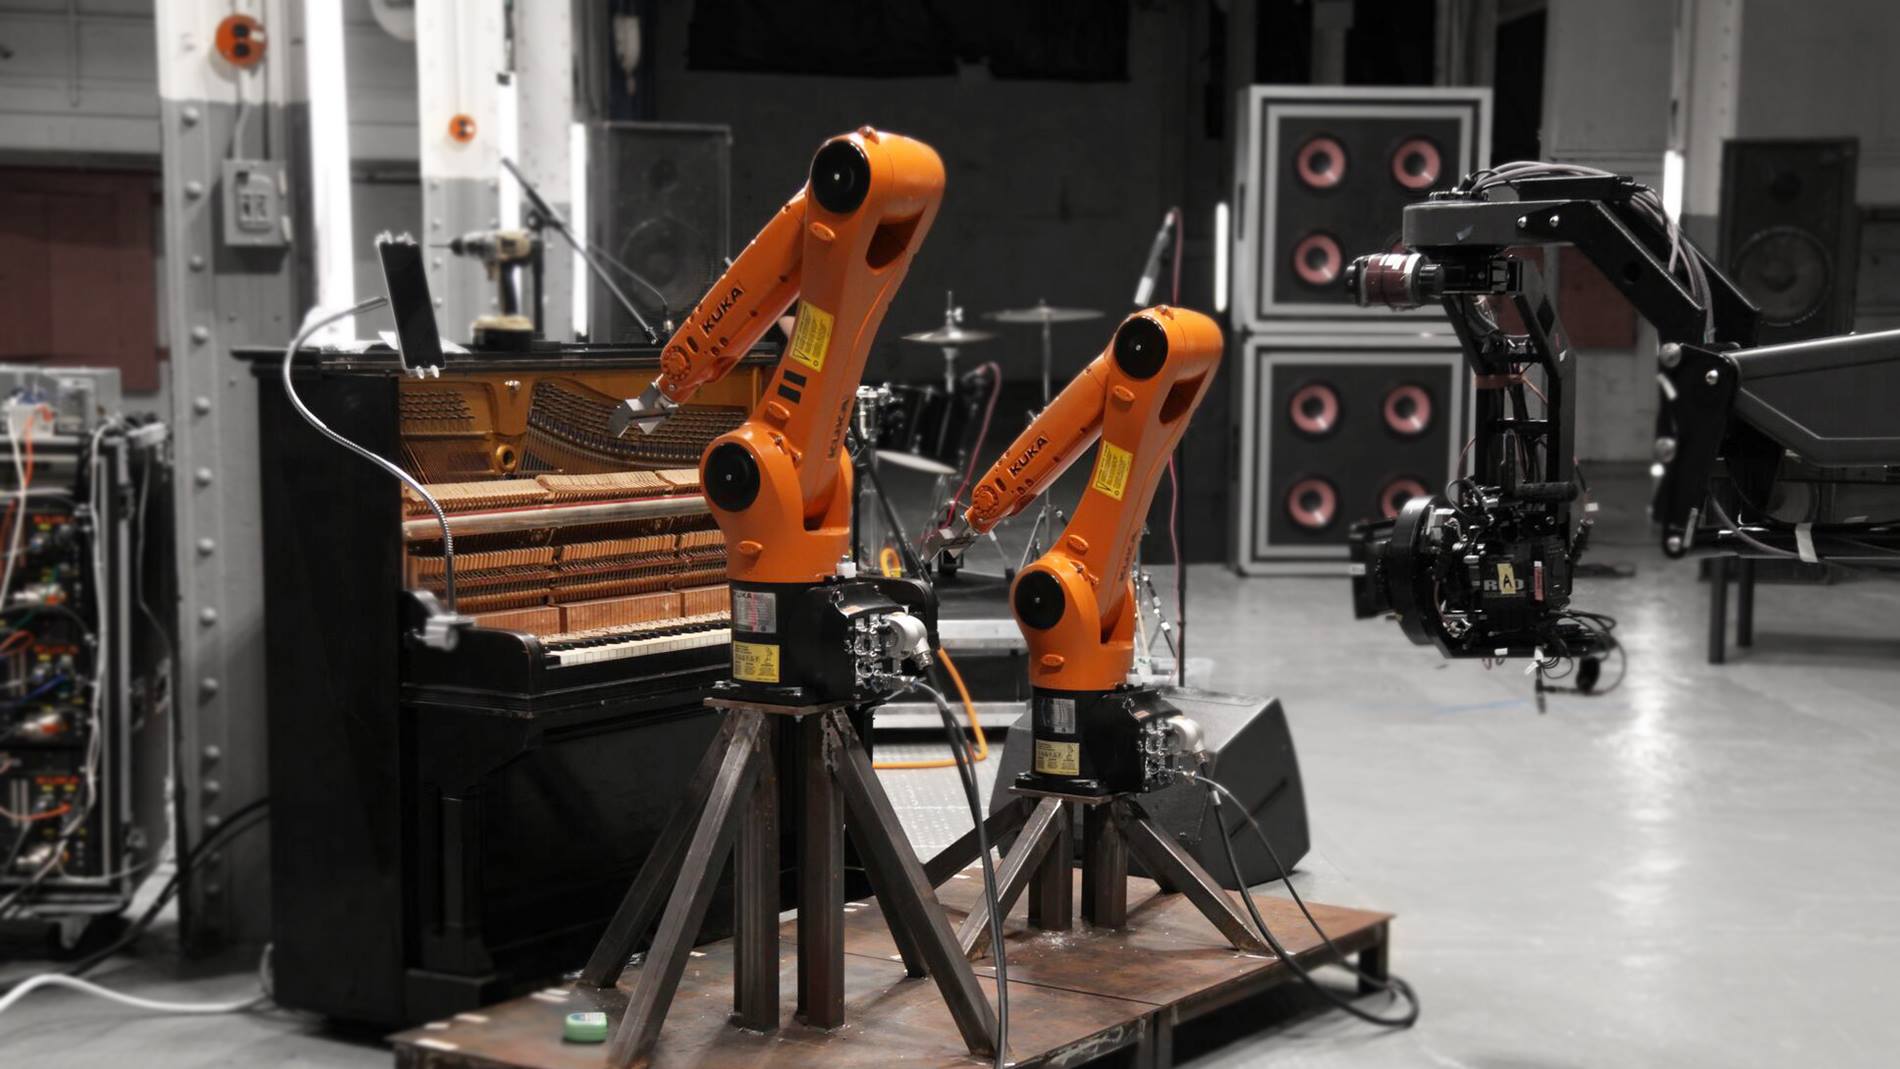 KUKA robots behind the scenes at music video